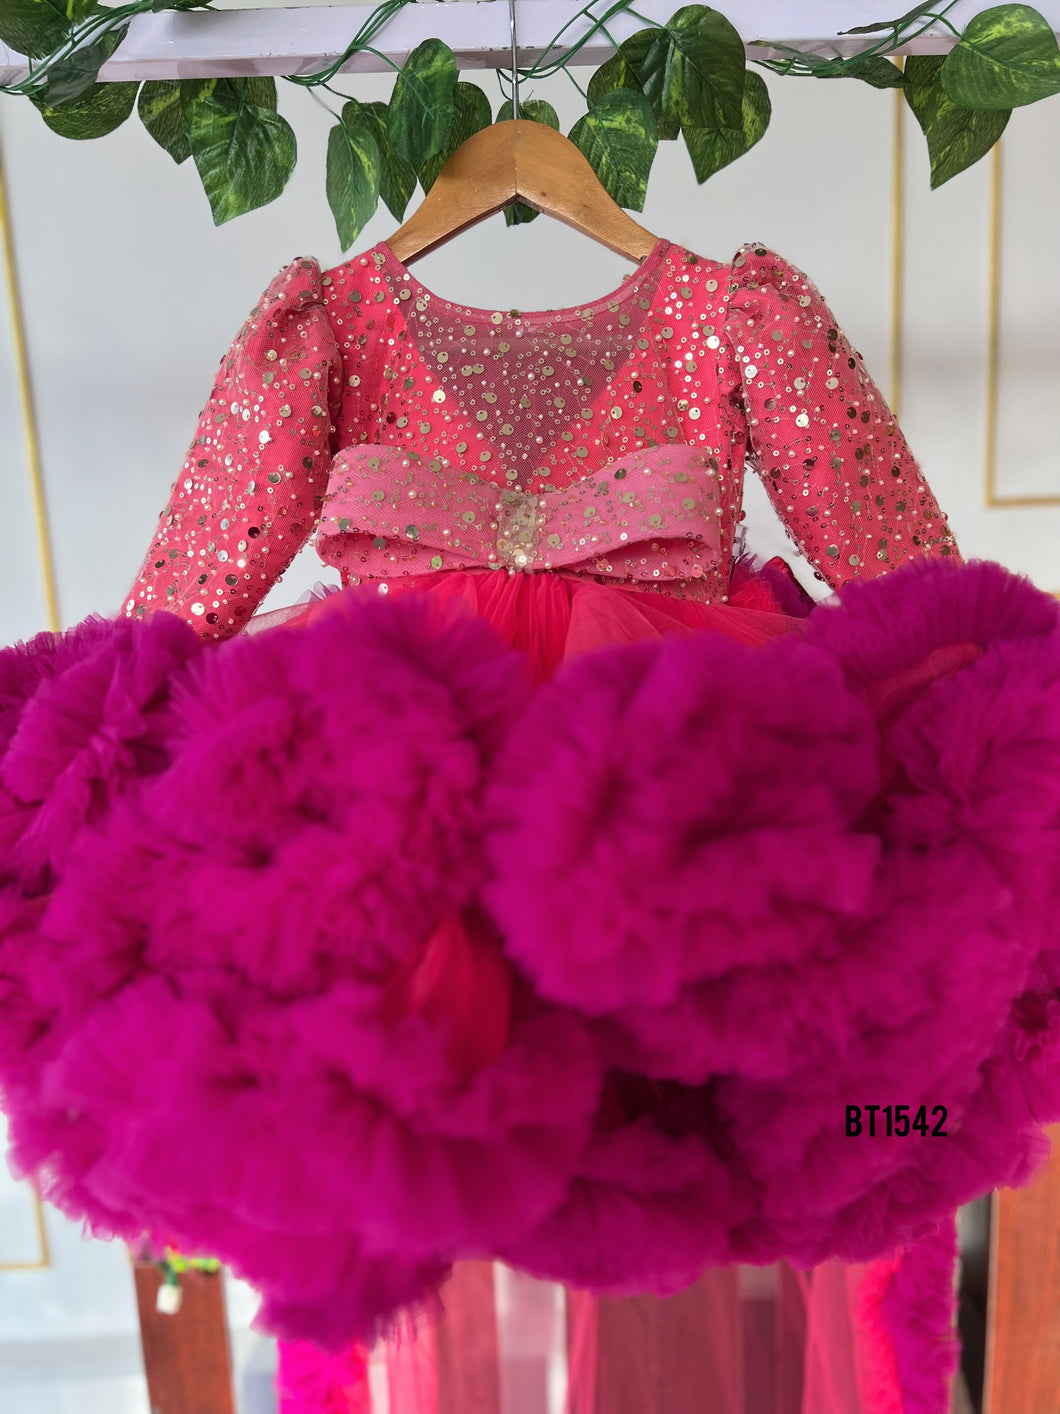 BT1542 Crimson Joy Festive Frolic Dress for Little Darlings